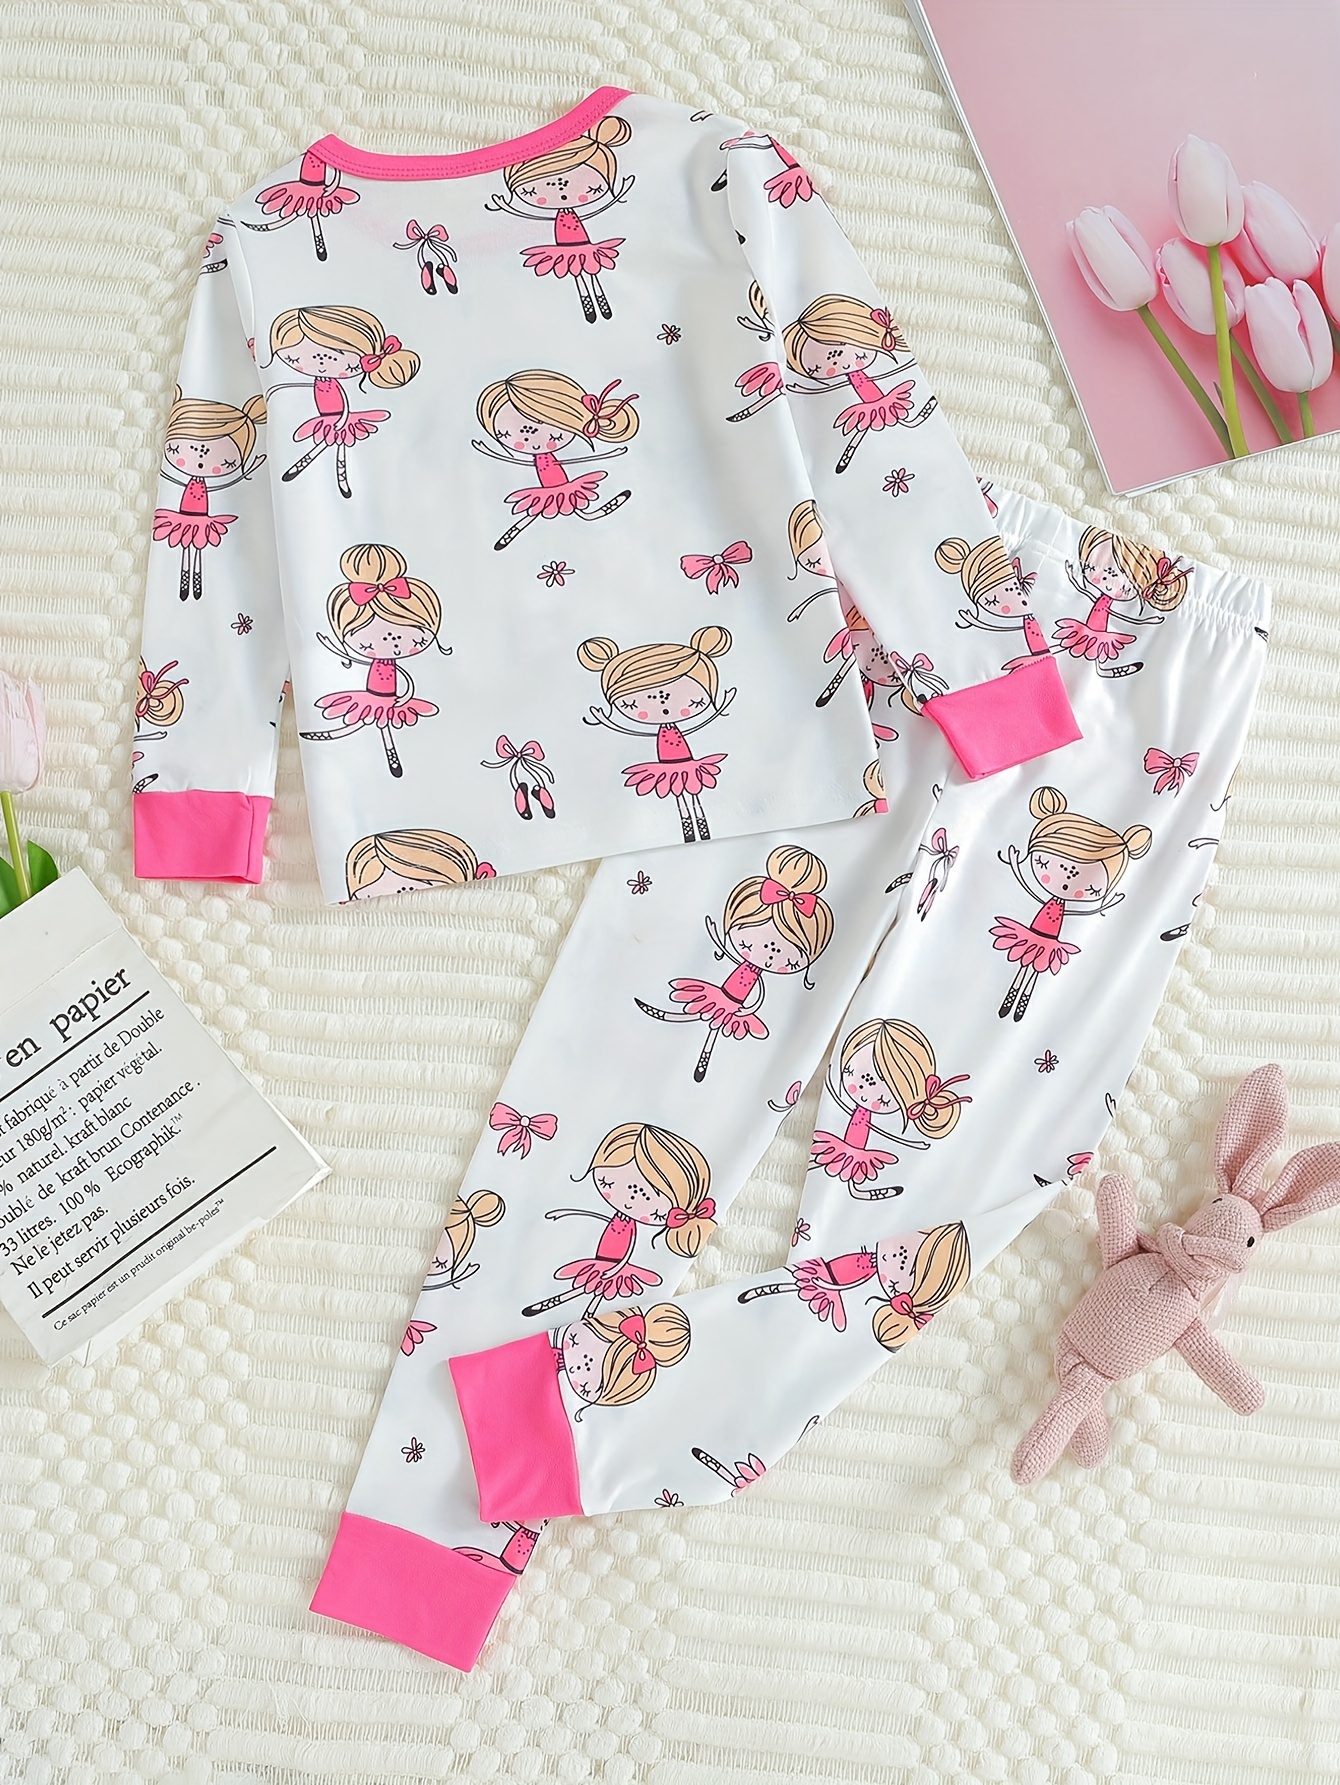 M.O.S Women's Junior Cotton Pajama Set 2 piece Cute Printed I Love Cats  Long Sleeve Long Pants Sleepwear Pj Set